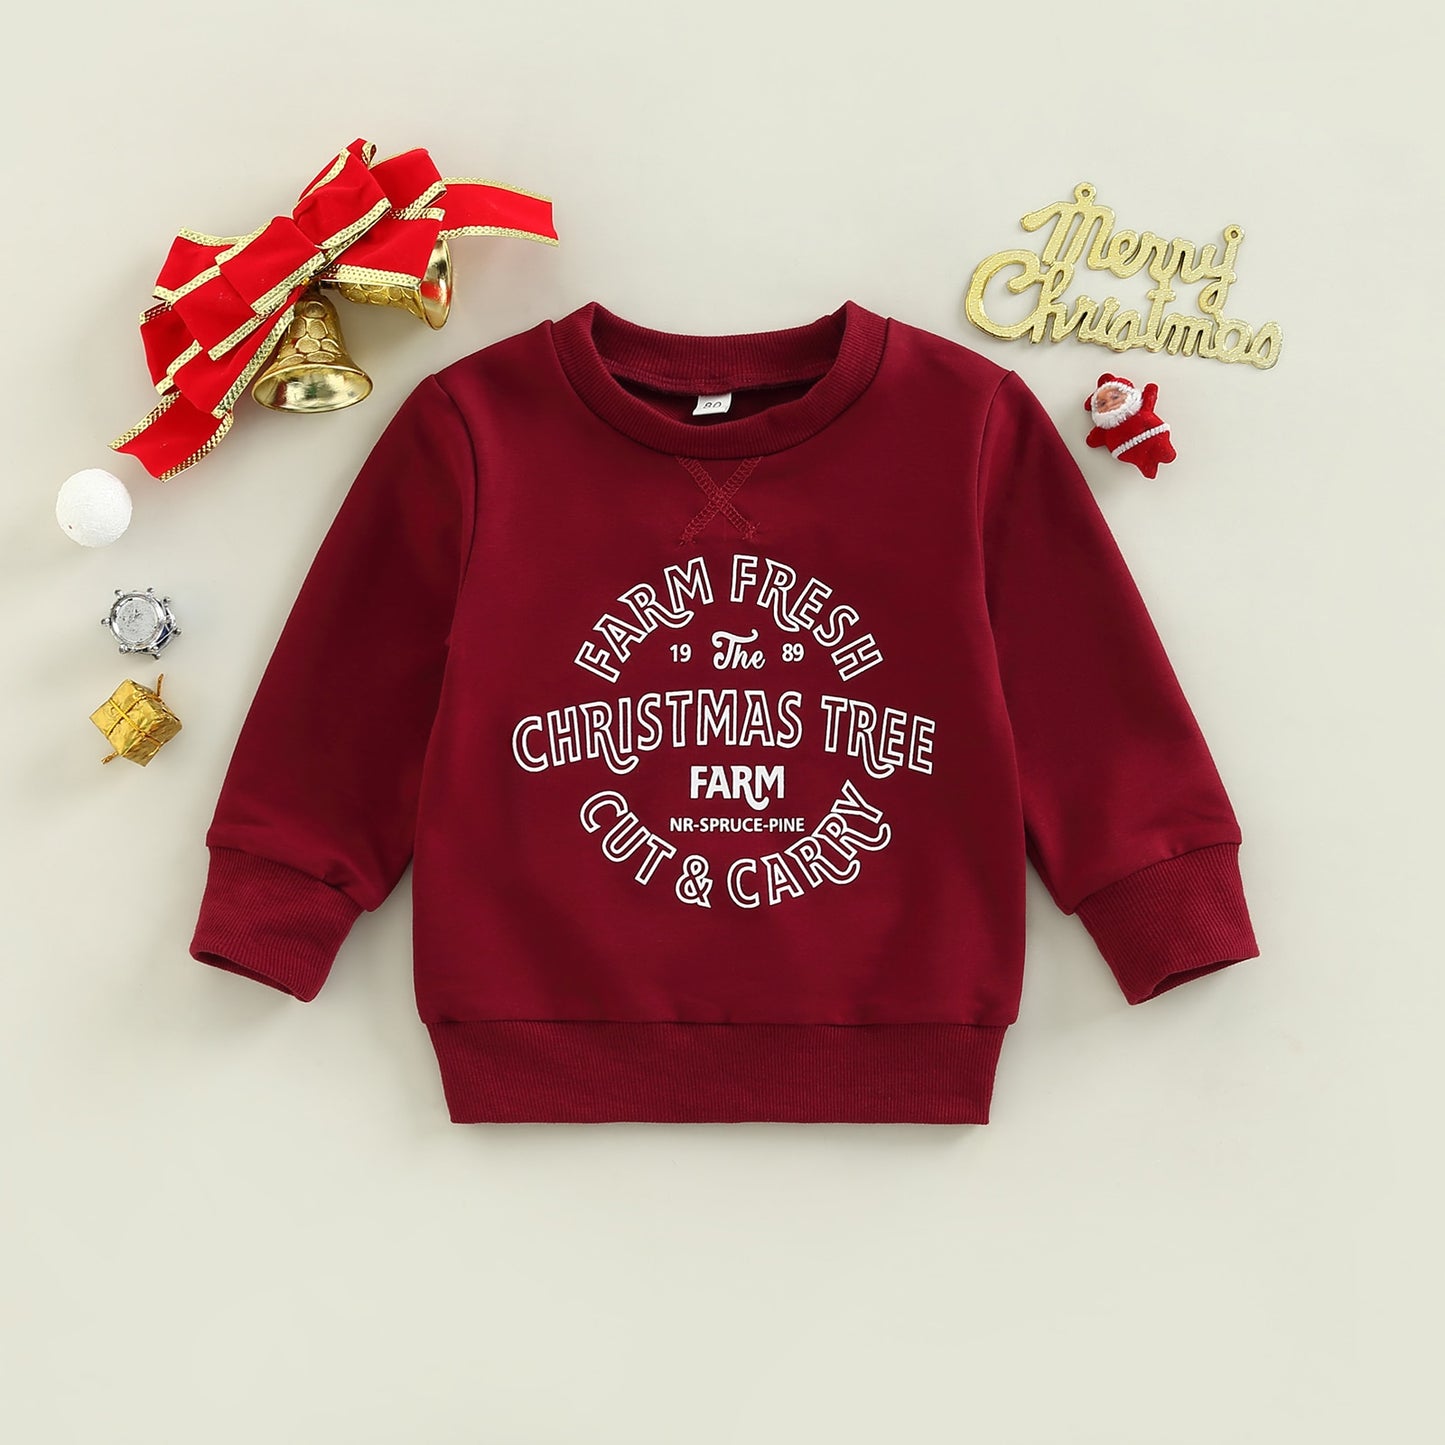 Unisex Infant Toddler Kids Red Christmas Tree Print Long Sleeve Pullover Sweatshirt